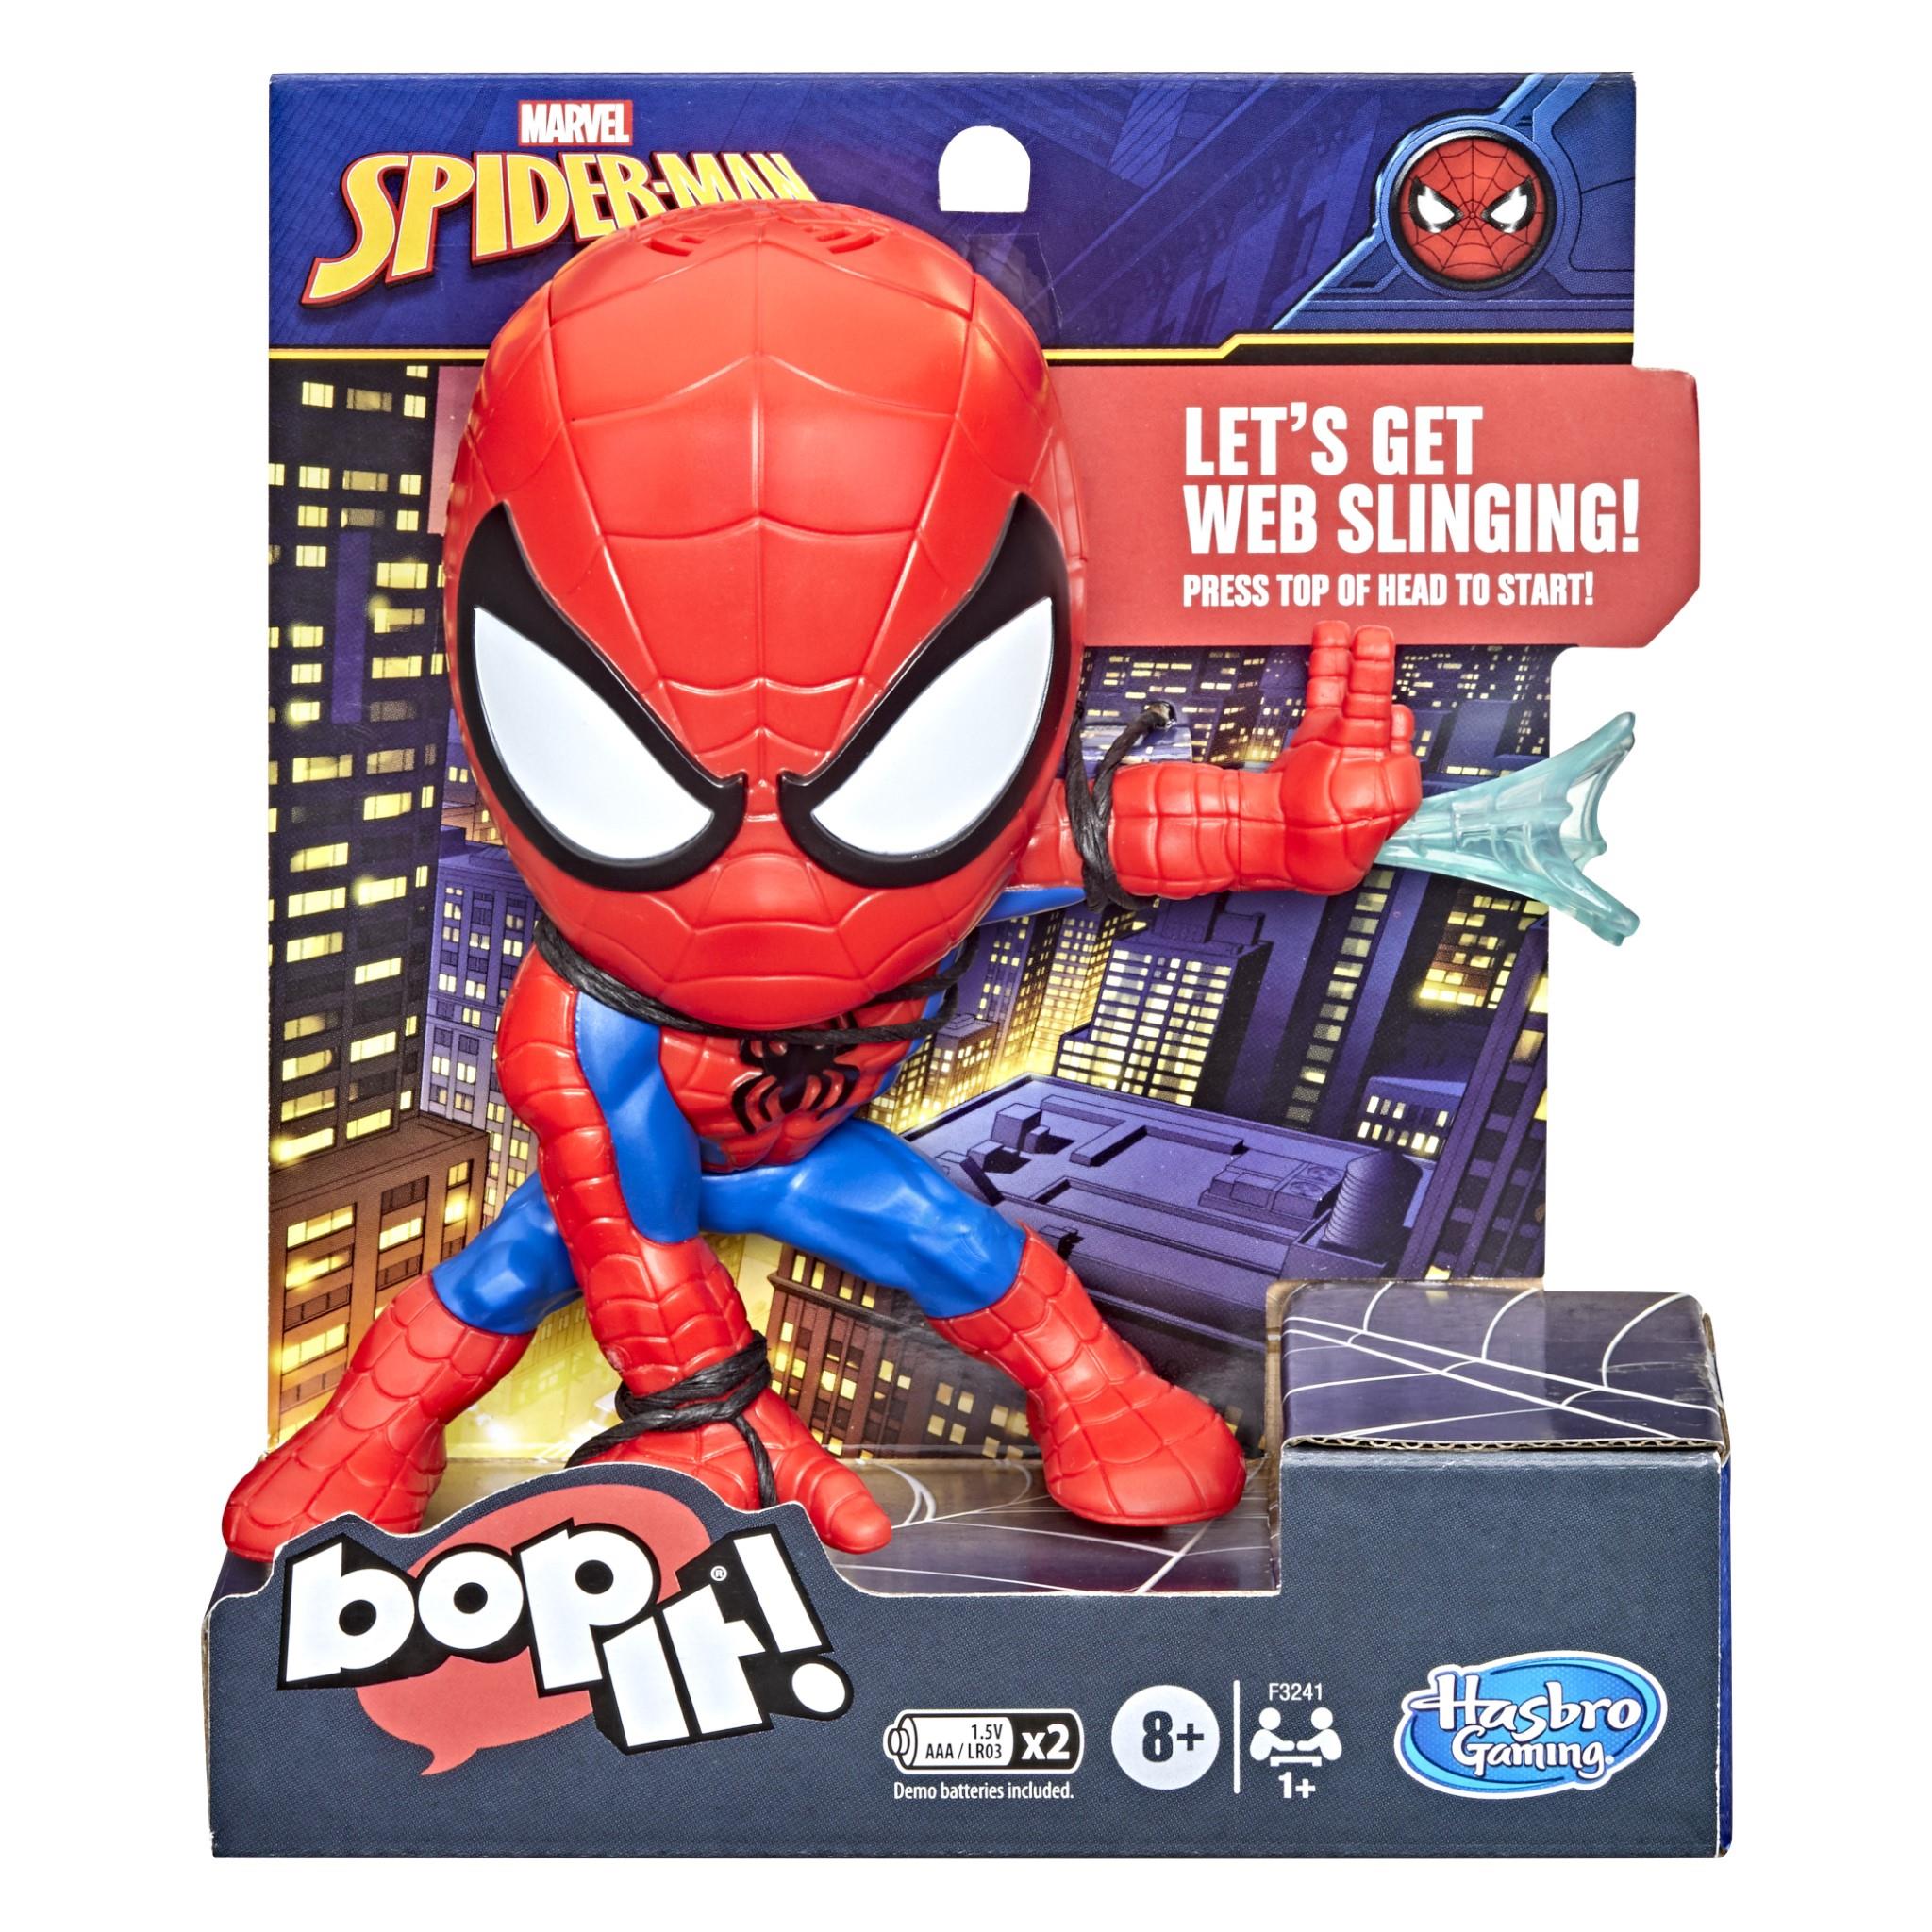 Bop It! Marvel Spider-Man Edition Game - JB Hi-Fi